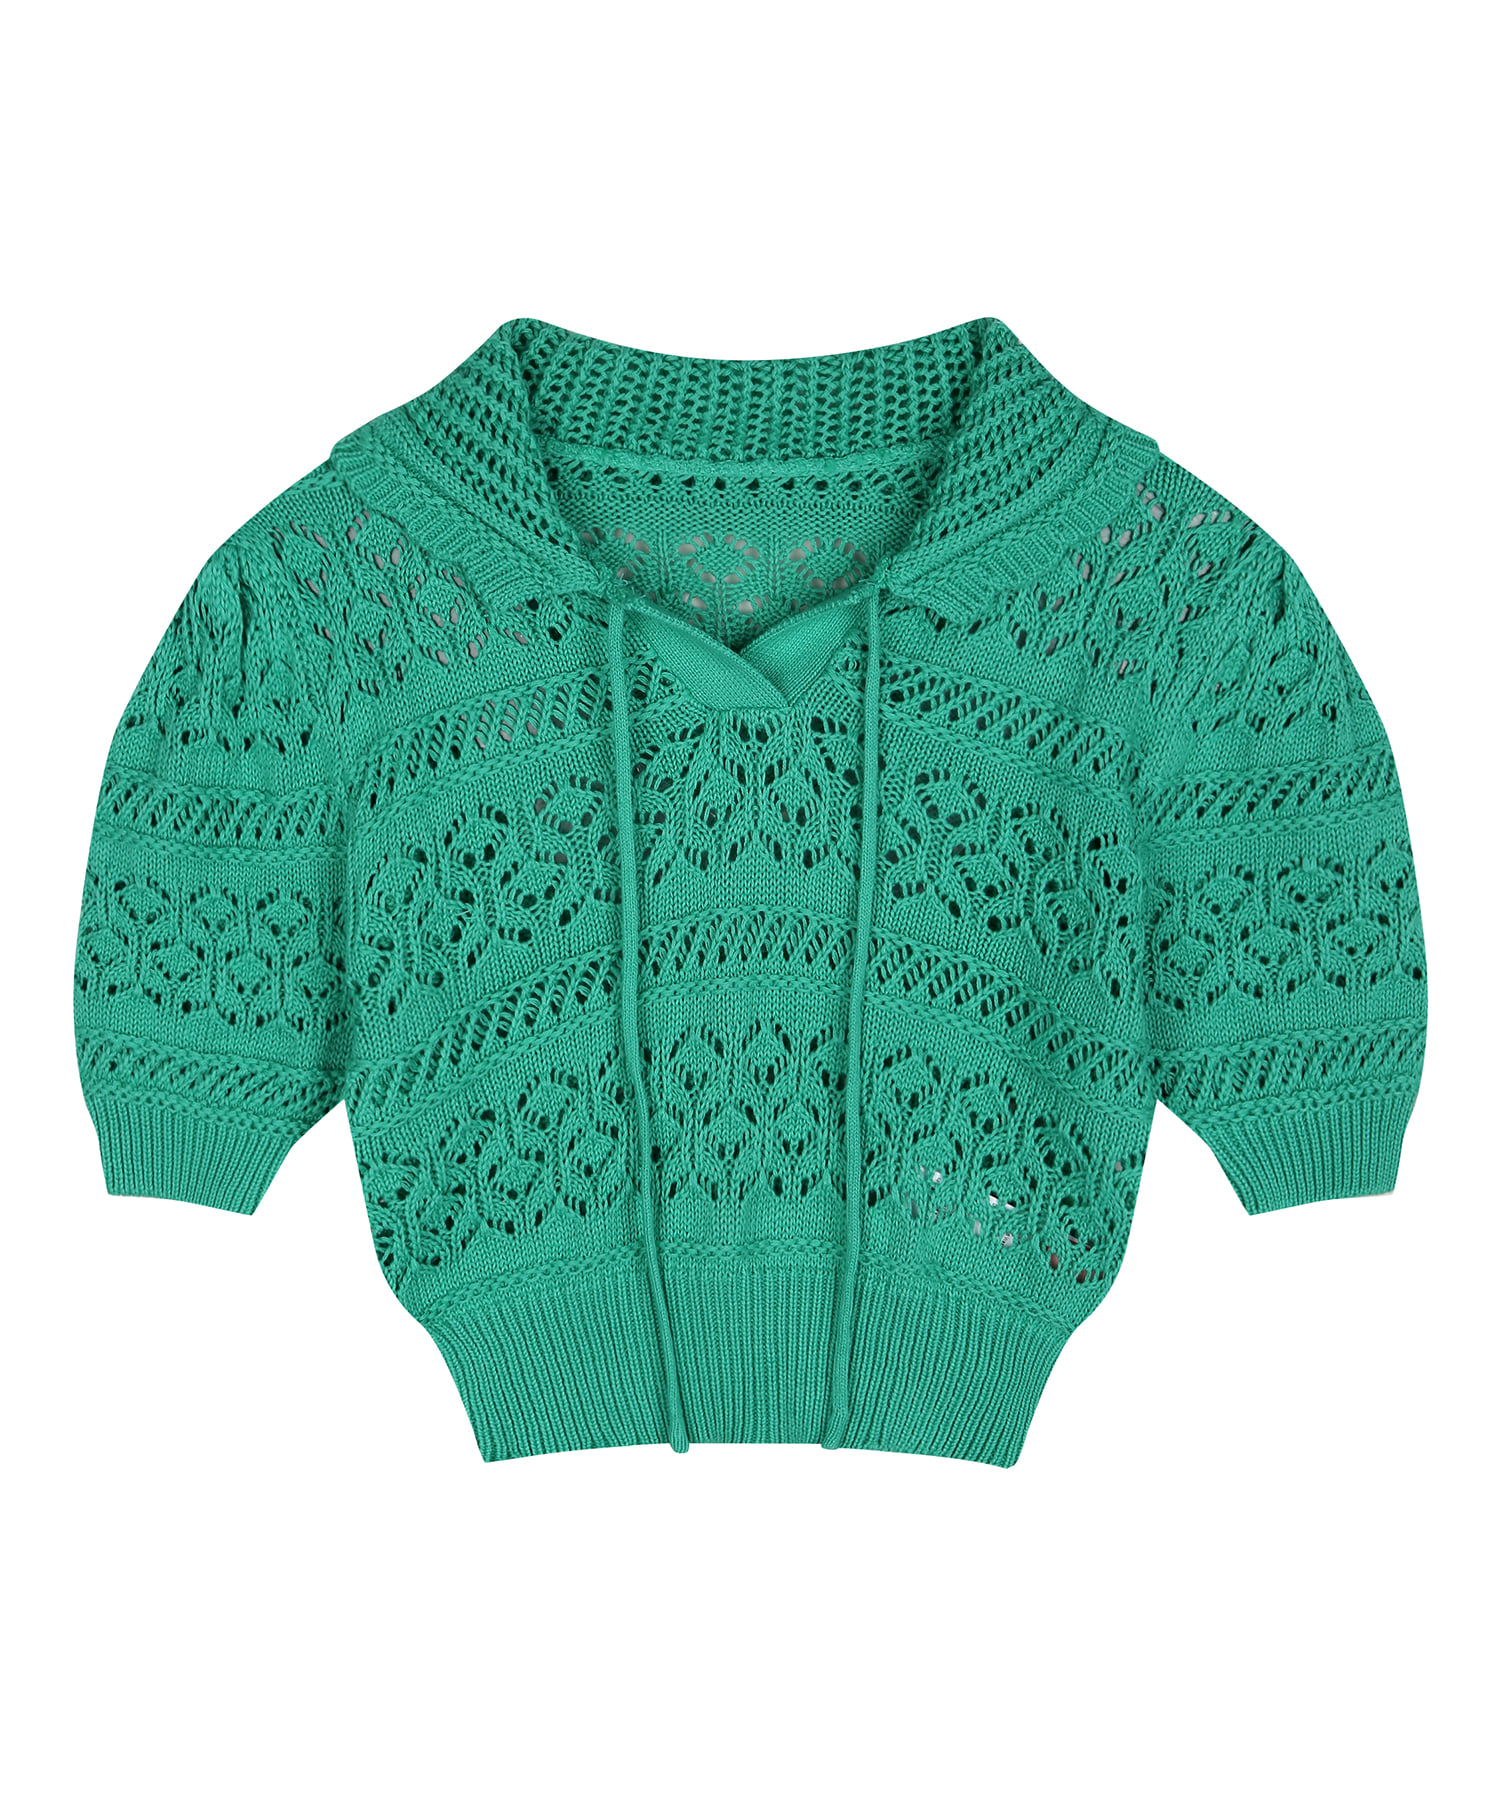 clover crop knit